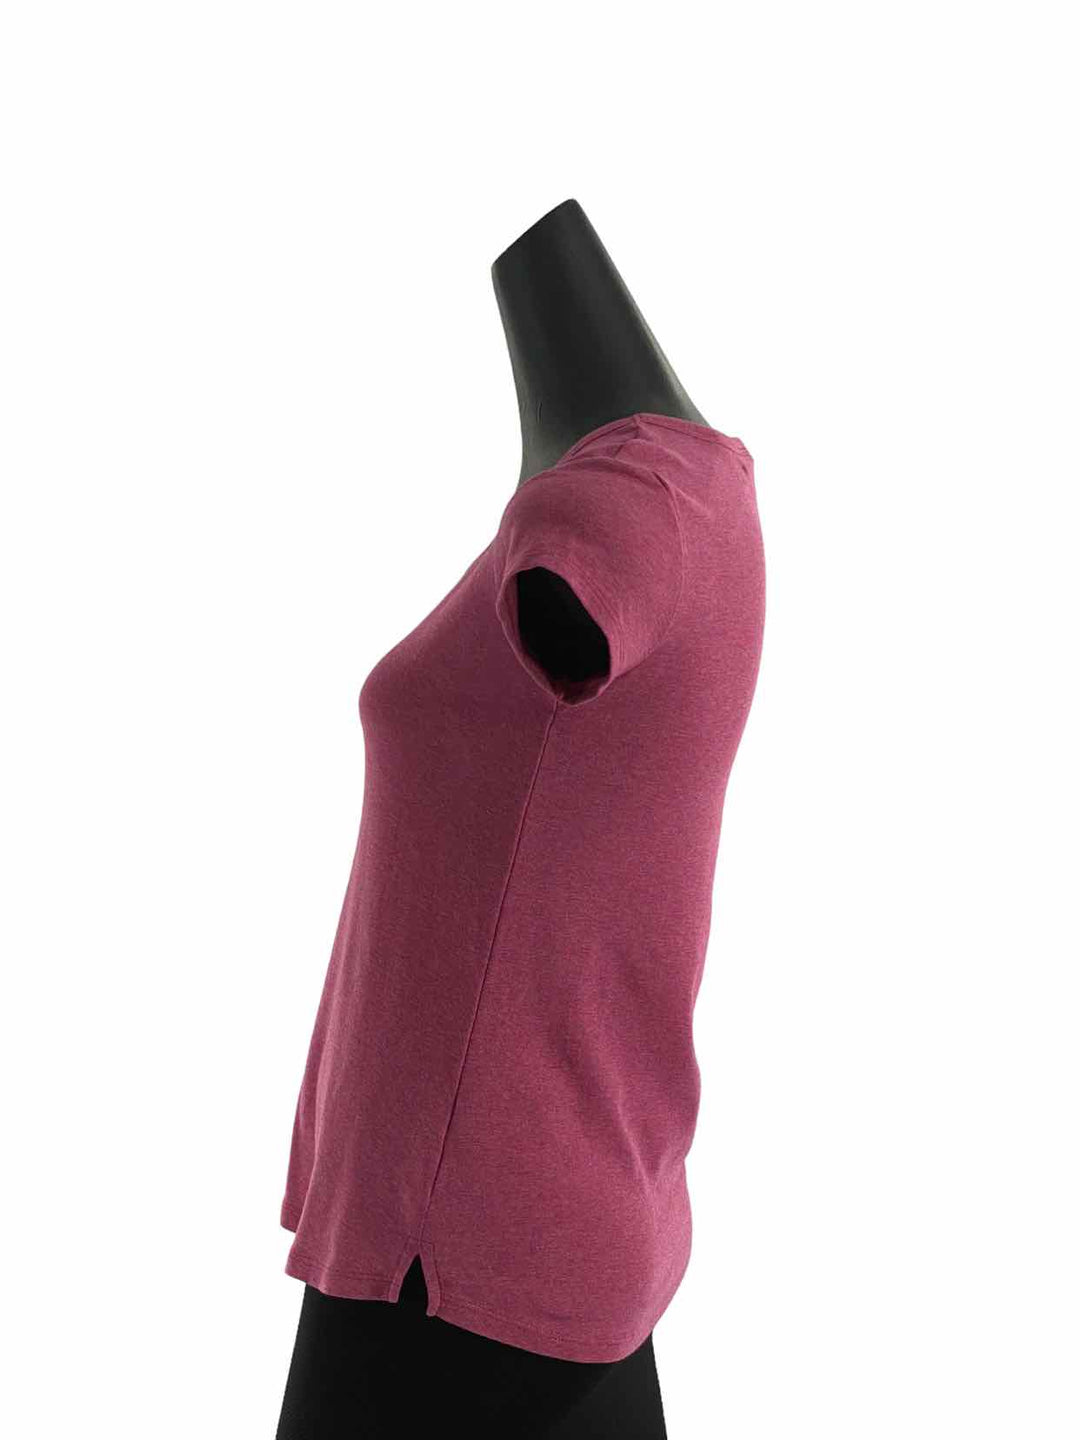 Cynthia Rowley Size S Pink T-shirt